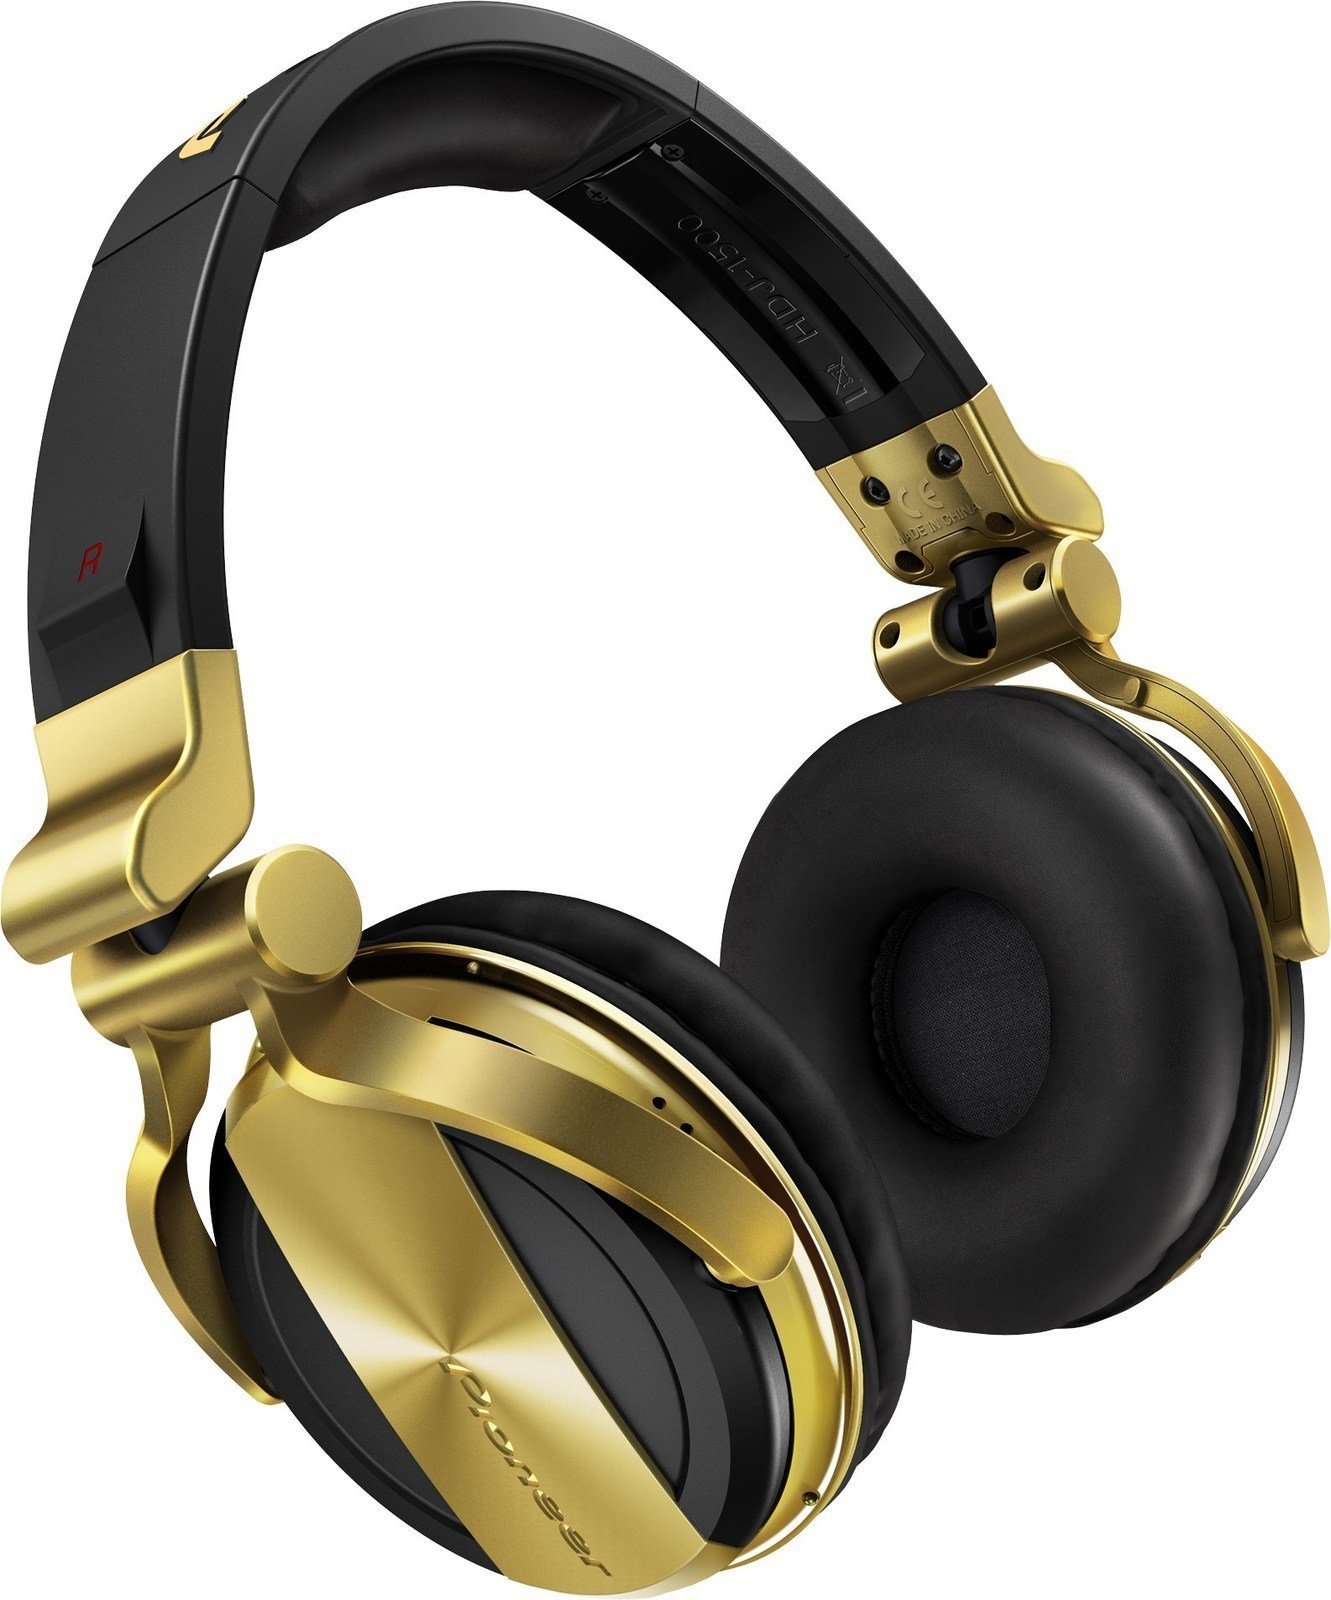 DJ sluchátka Pioneer Dj HDJ-1500-N Gold